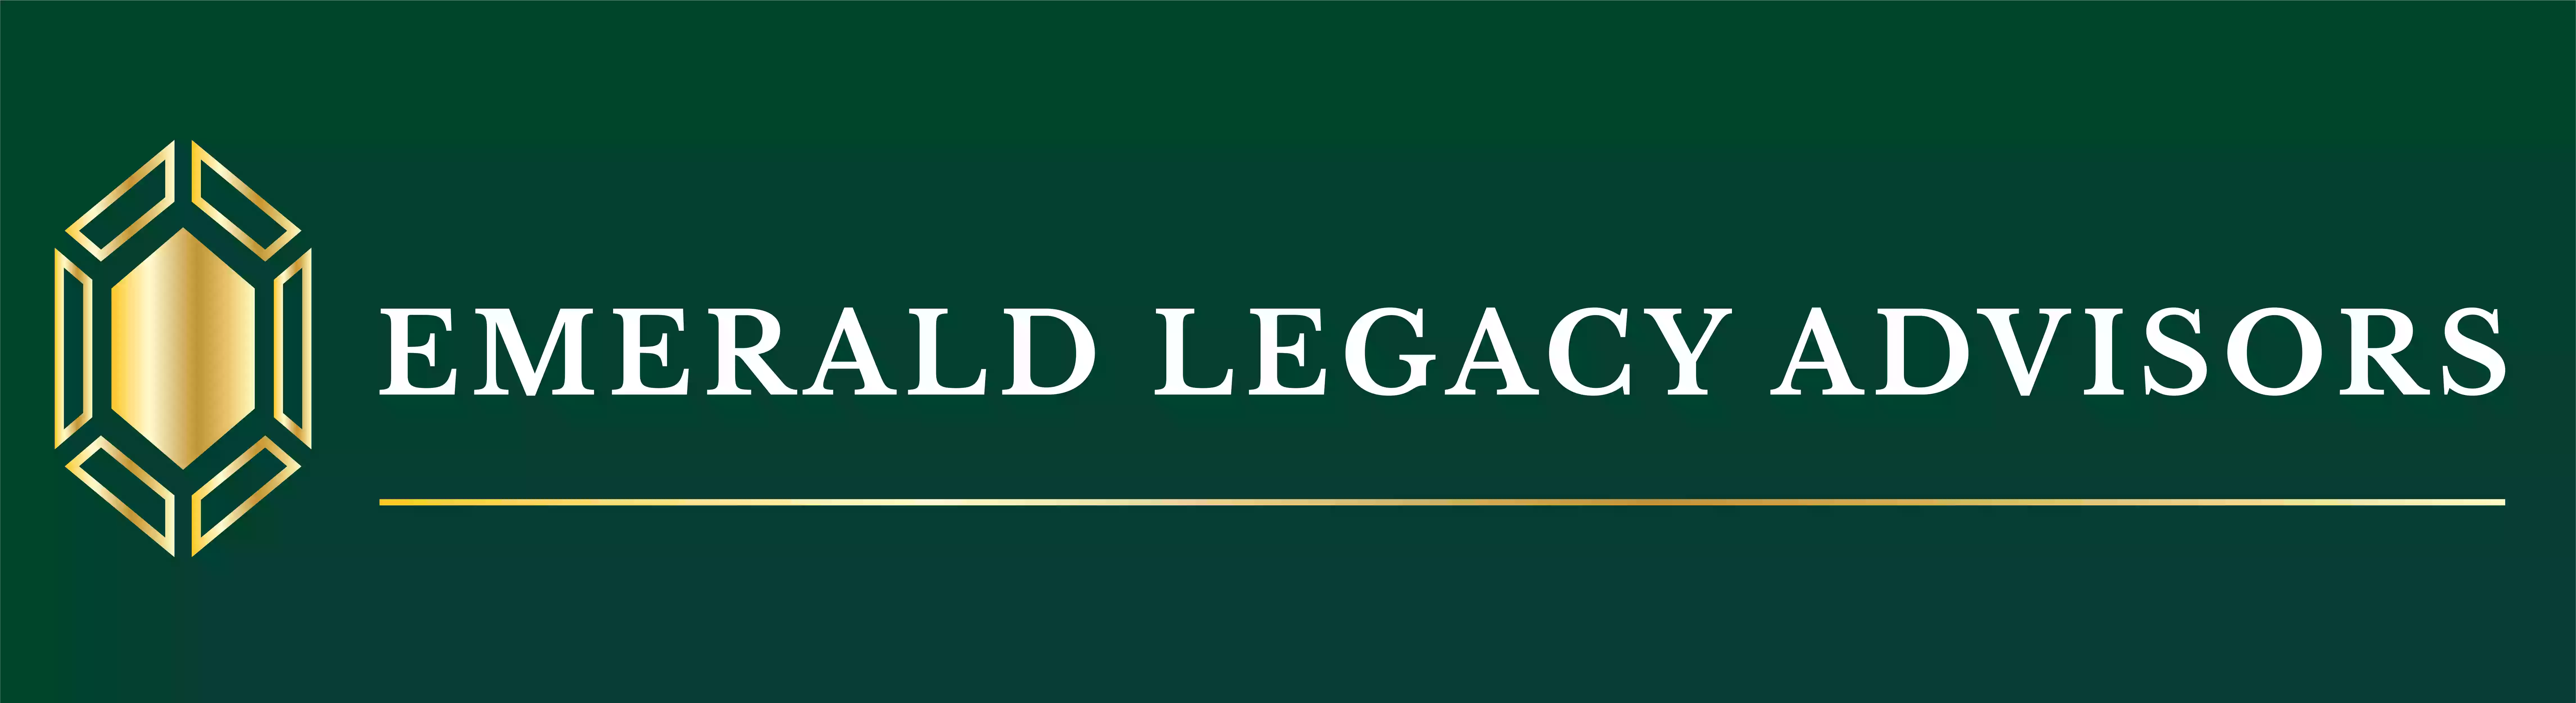 Emerald Legacy Advisors